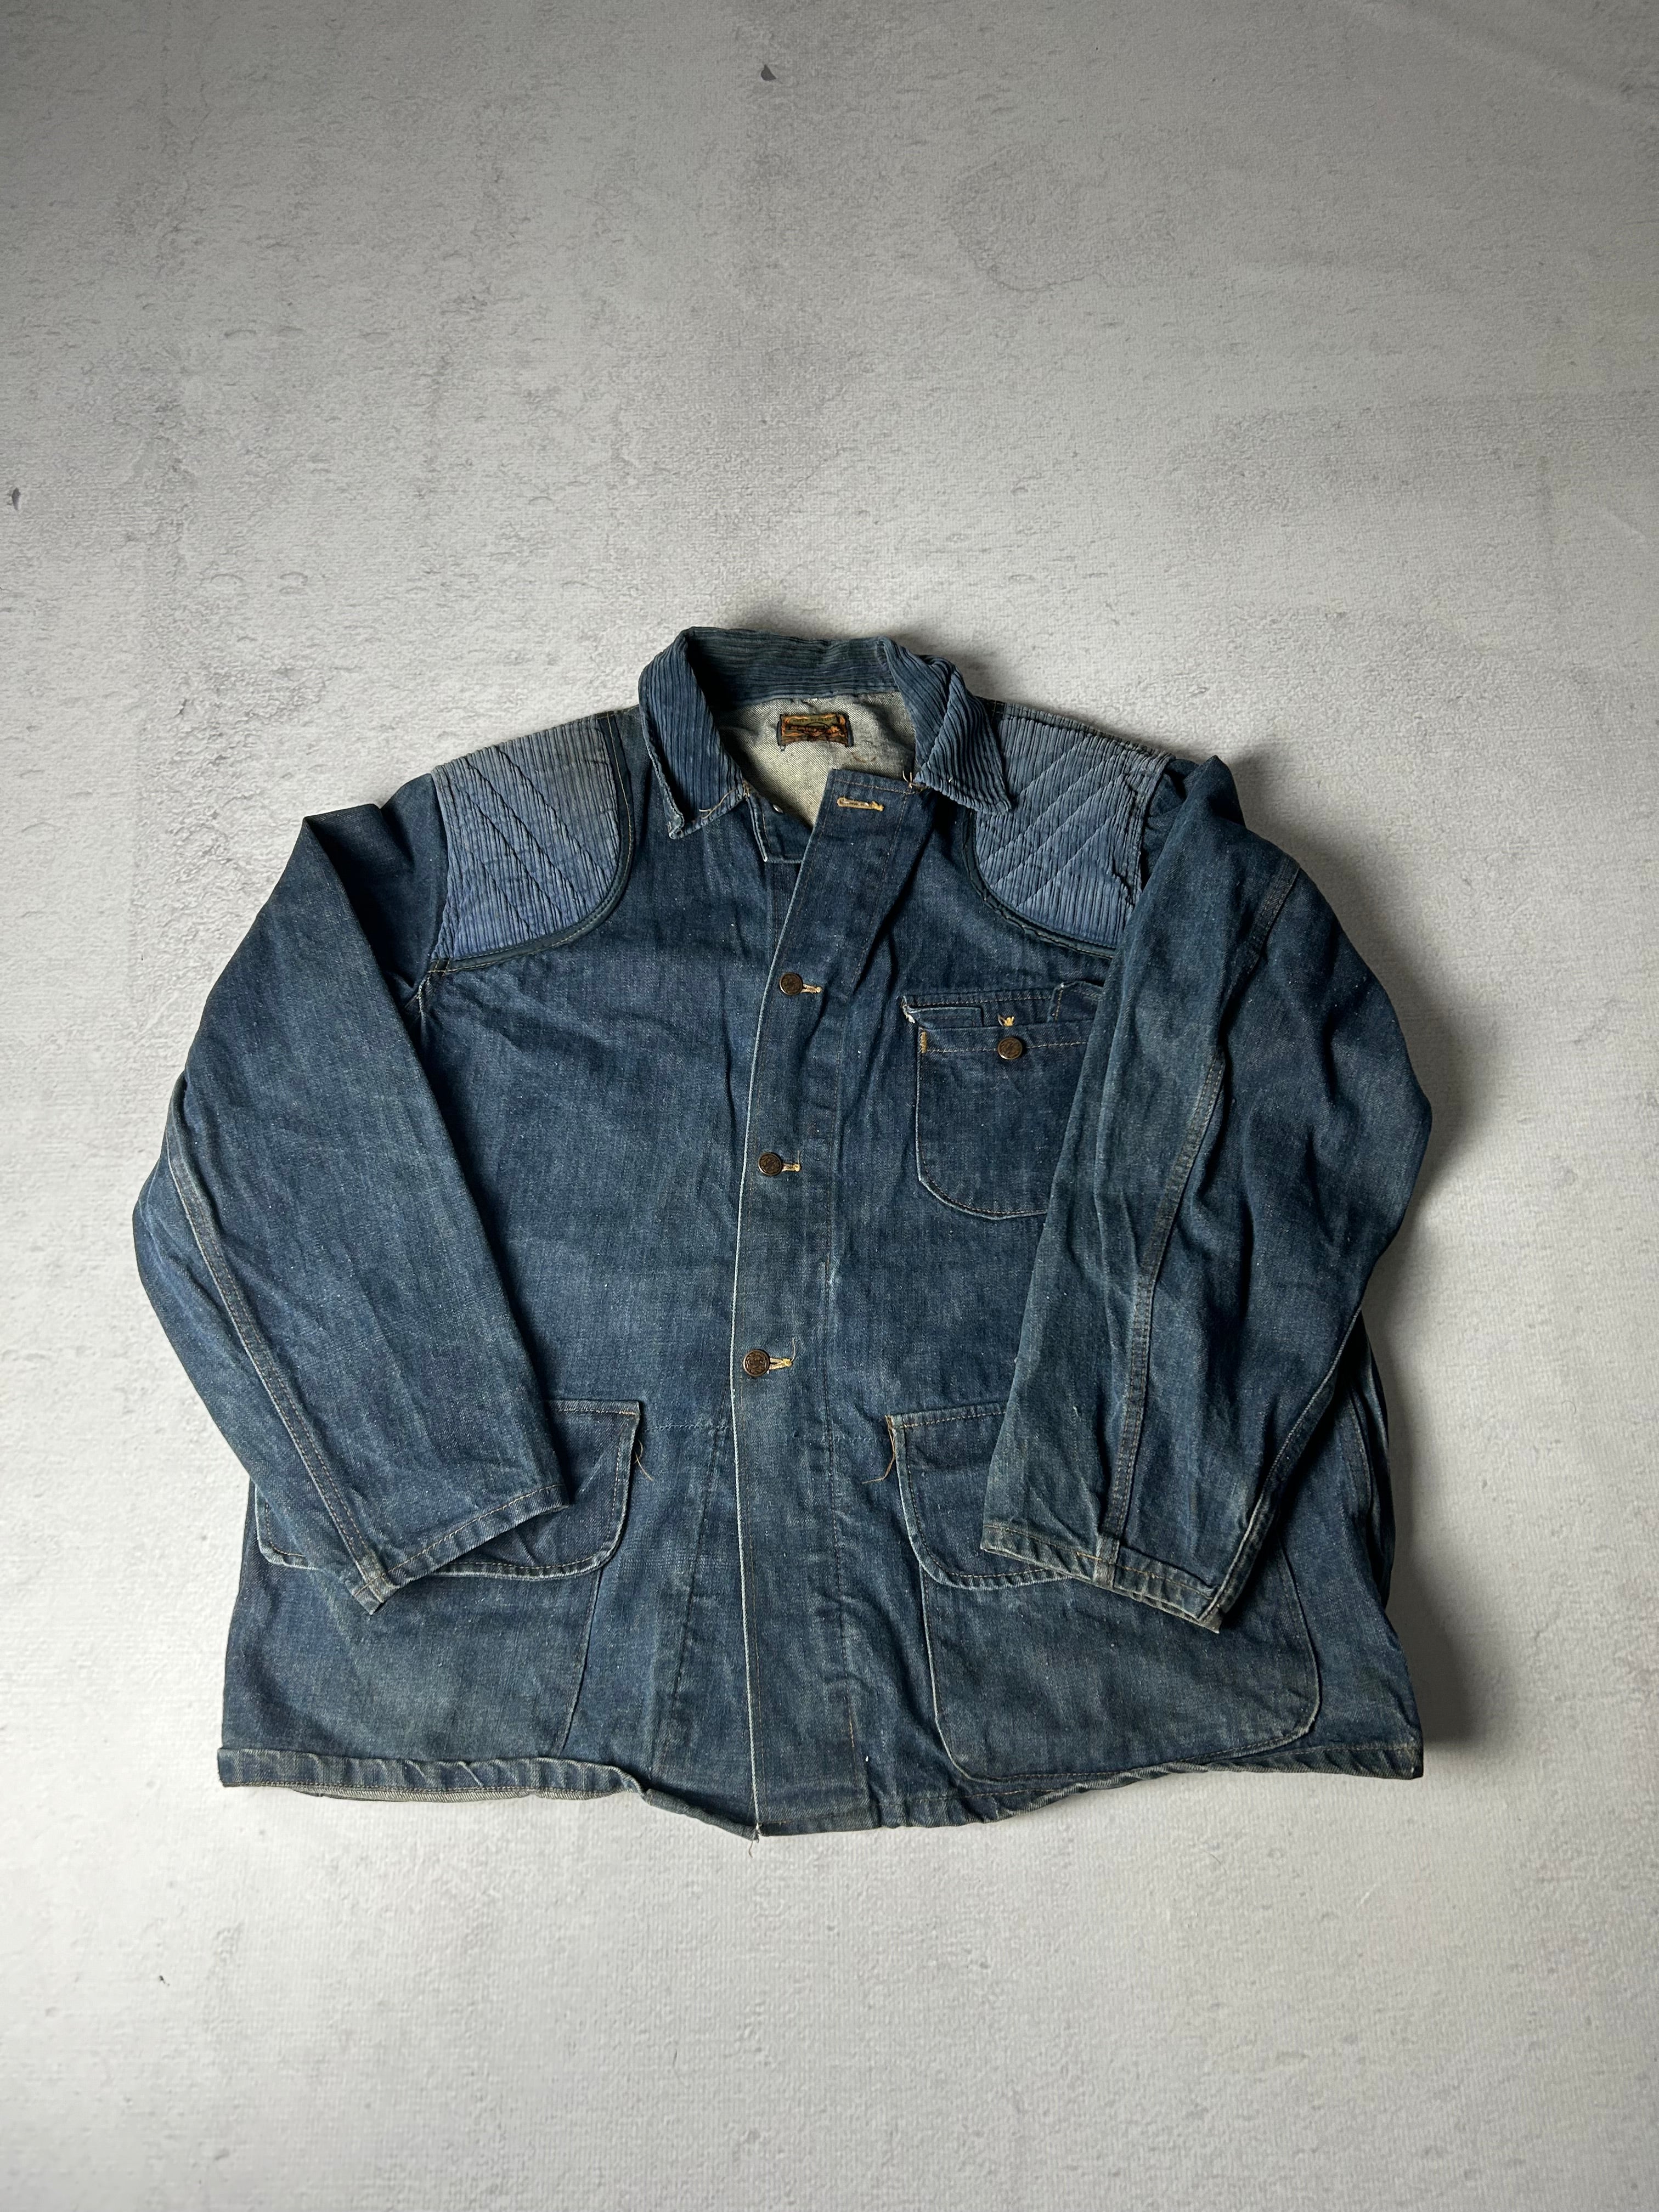 Vintage 90s Denim Jacket - Men's XL